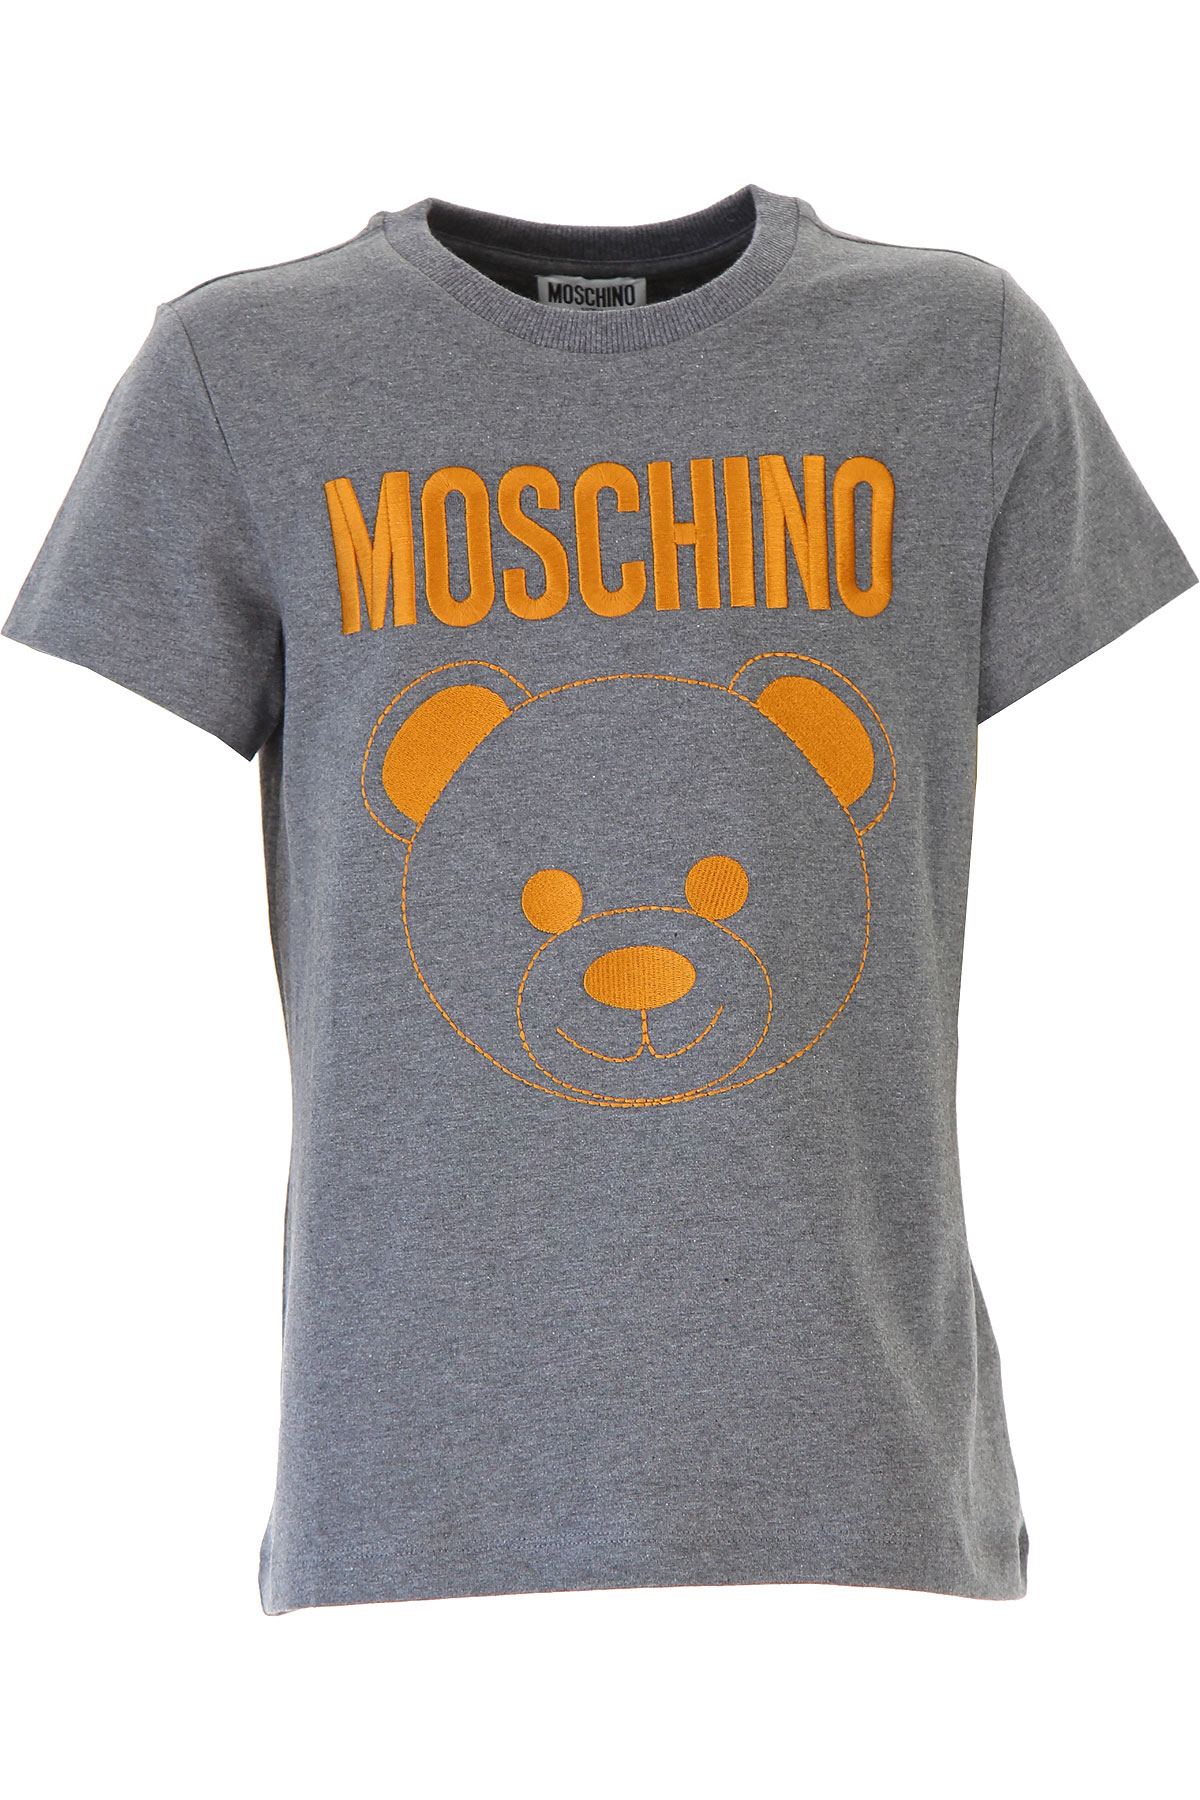 Moschino Kinder T-Shirt für Jungen Günstig im Sale, Grau, Baumwolle, 2017, 10Y 12Y 14Y 8Y